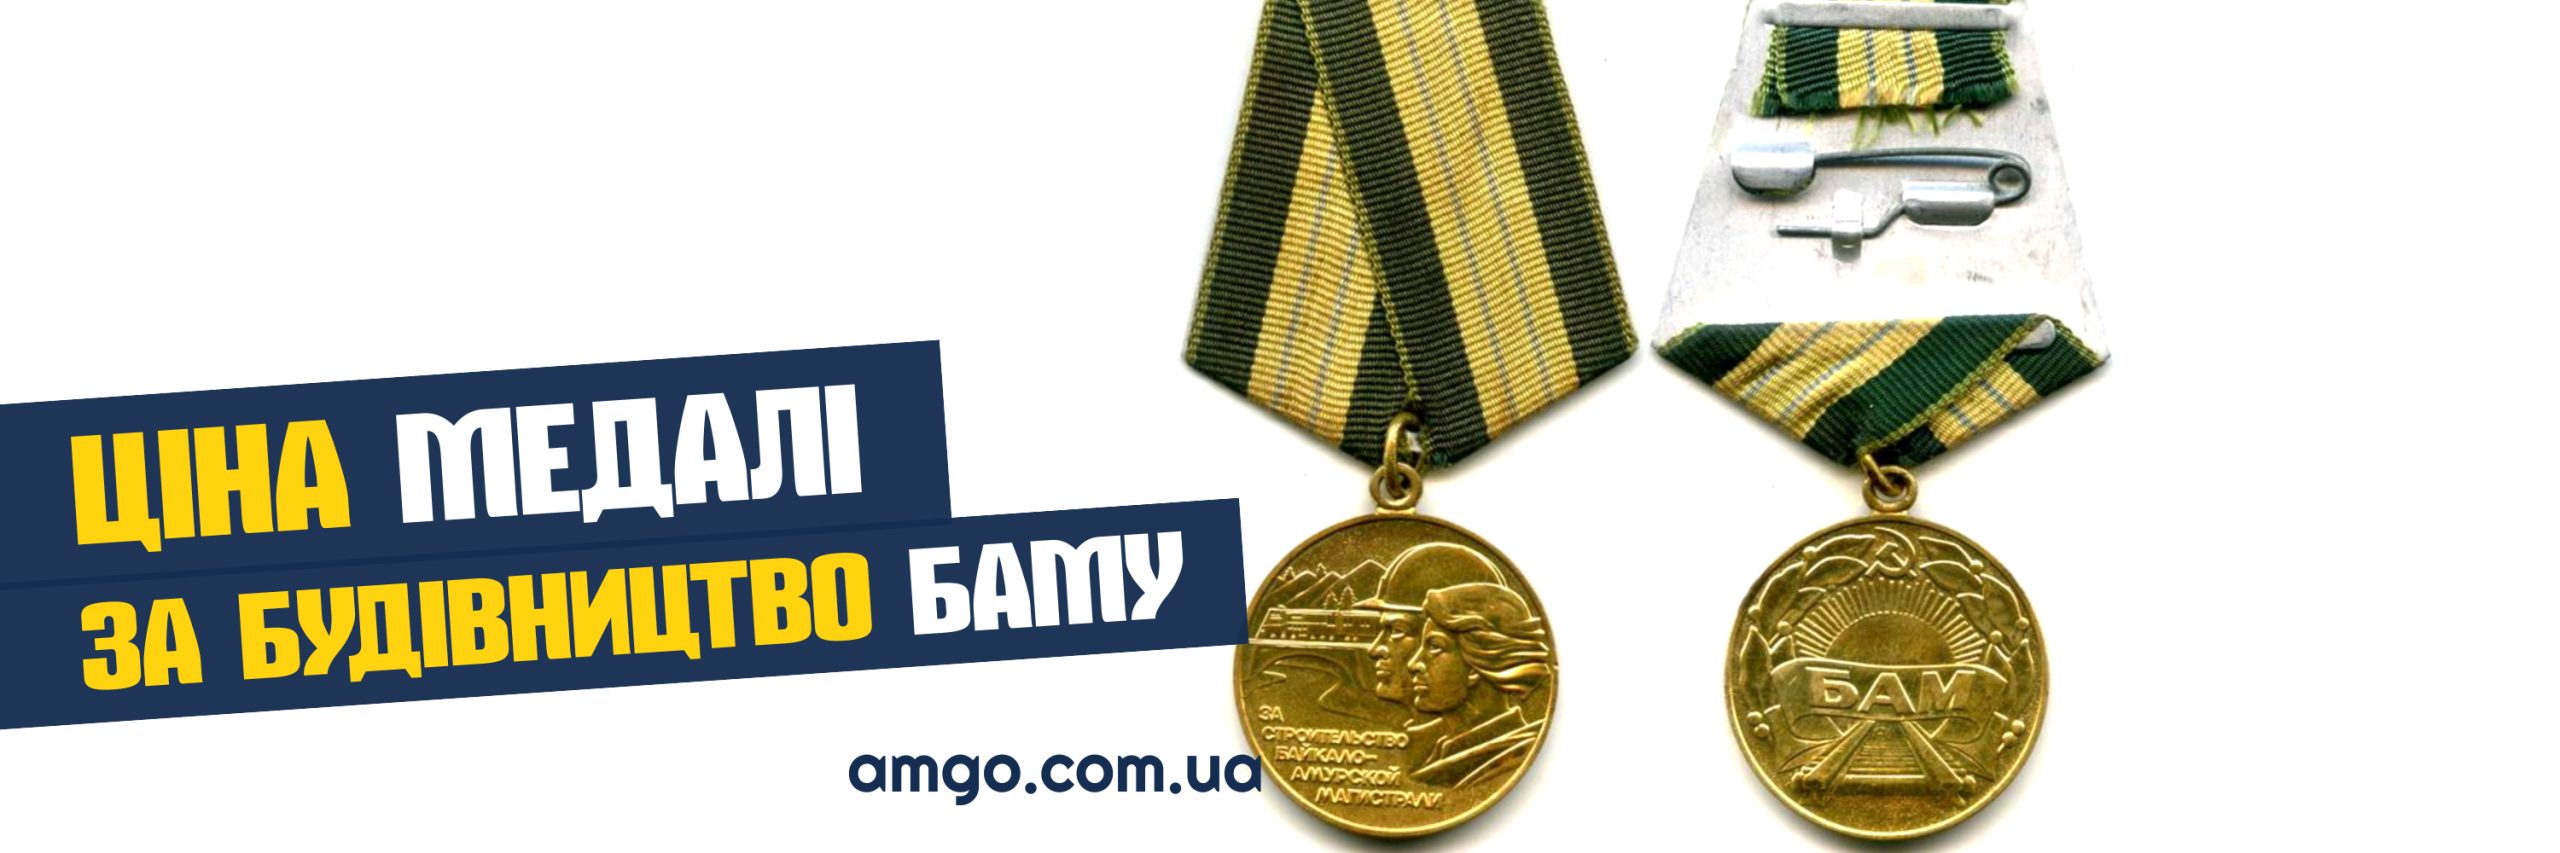 Медаль за будівництво БАМа